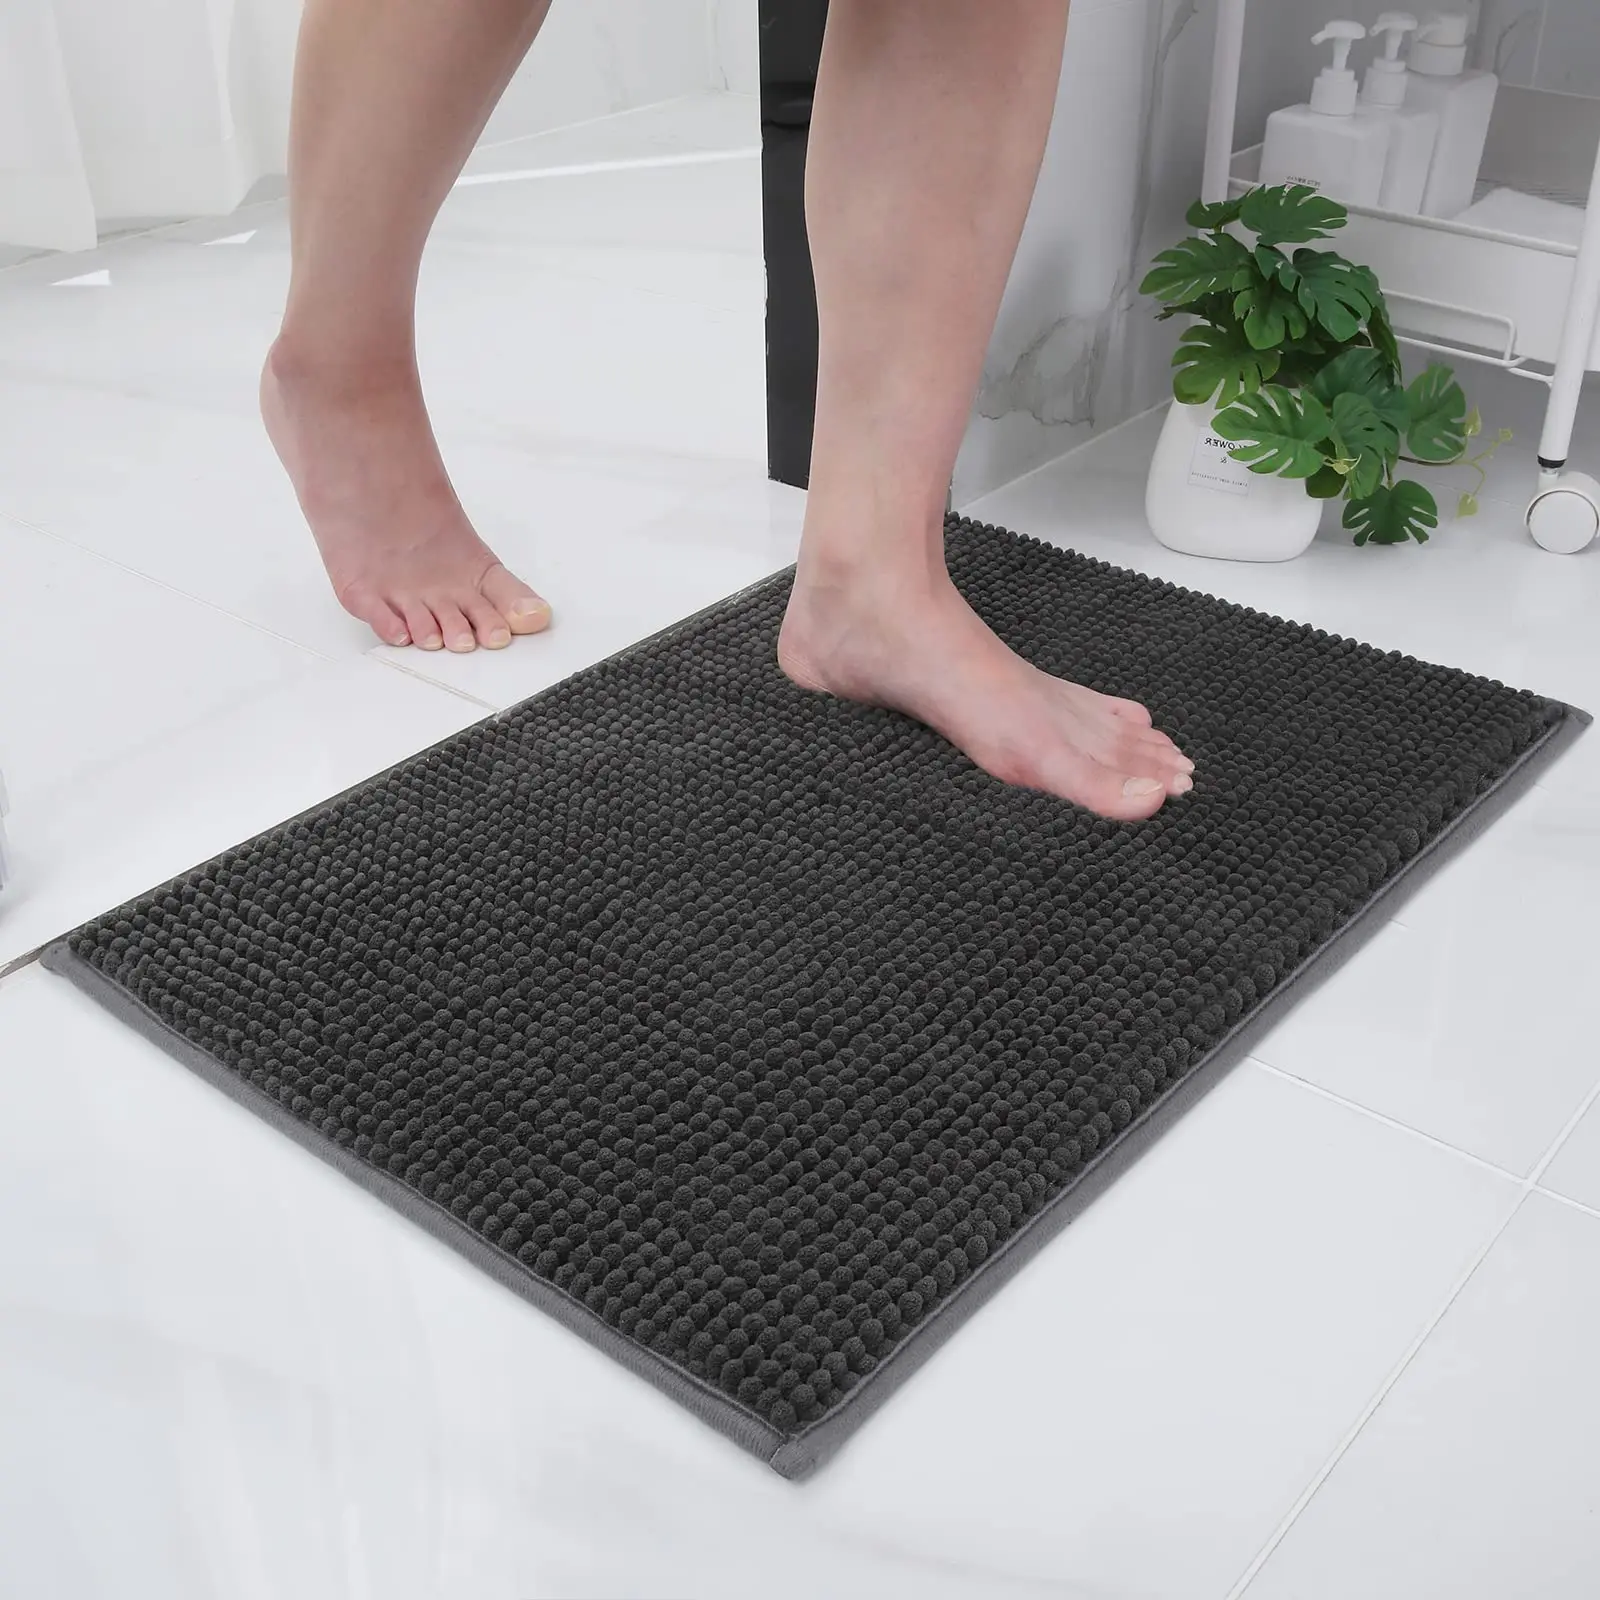 Homaxy PVC Water-proof Foot Mat Soft Non-Slip Bathroom Mat with